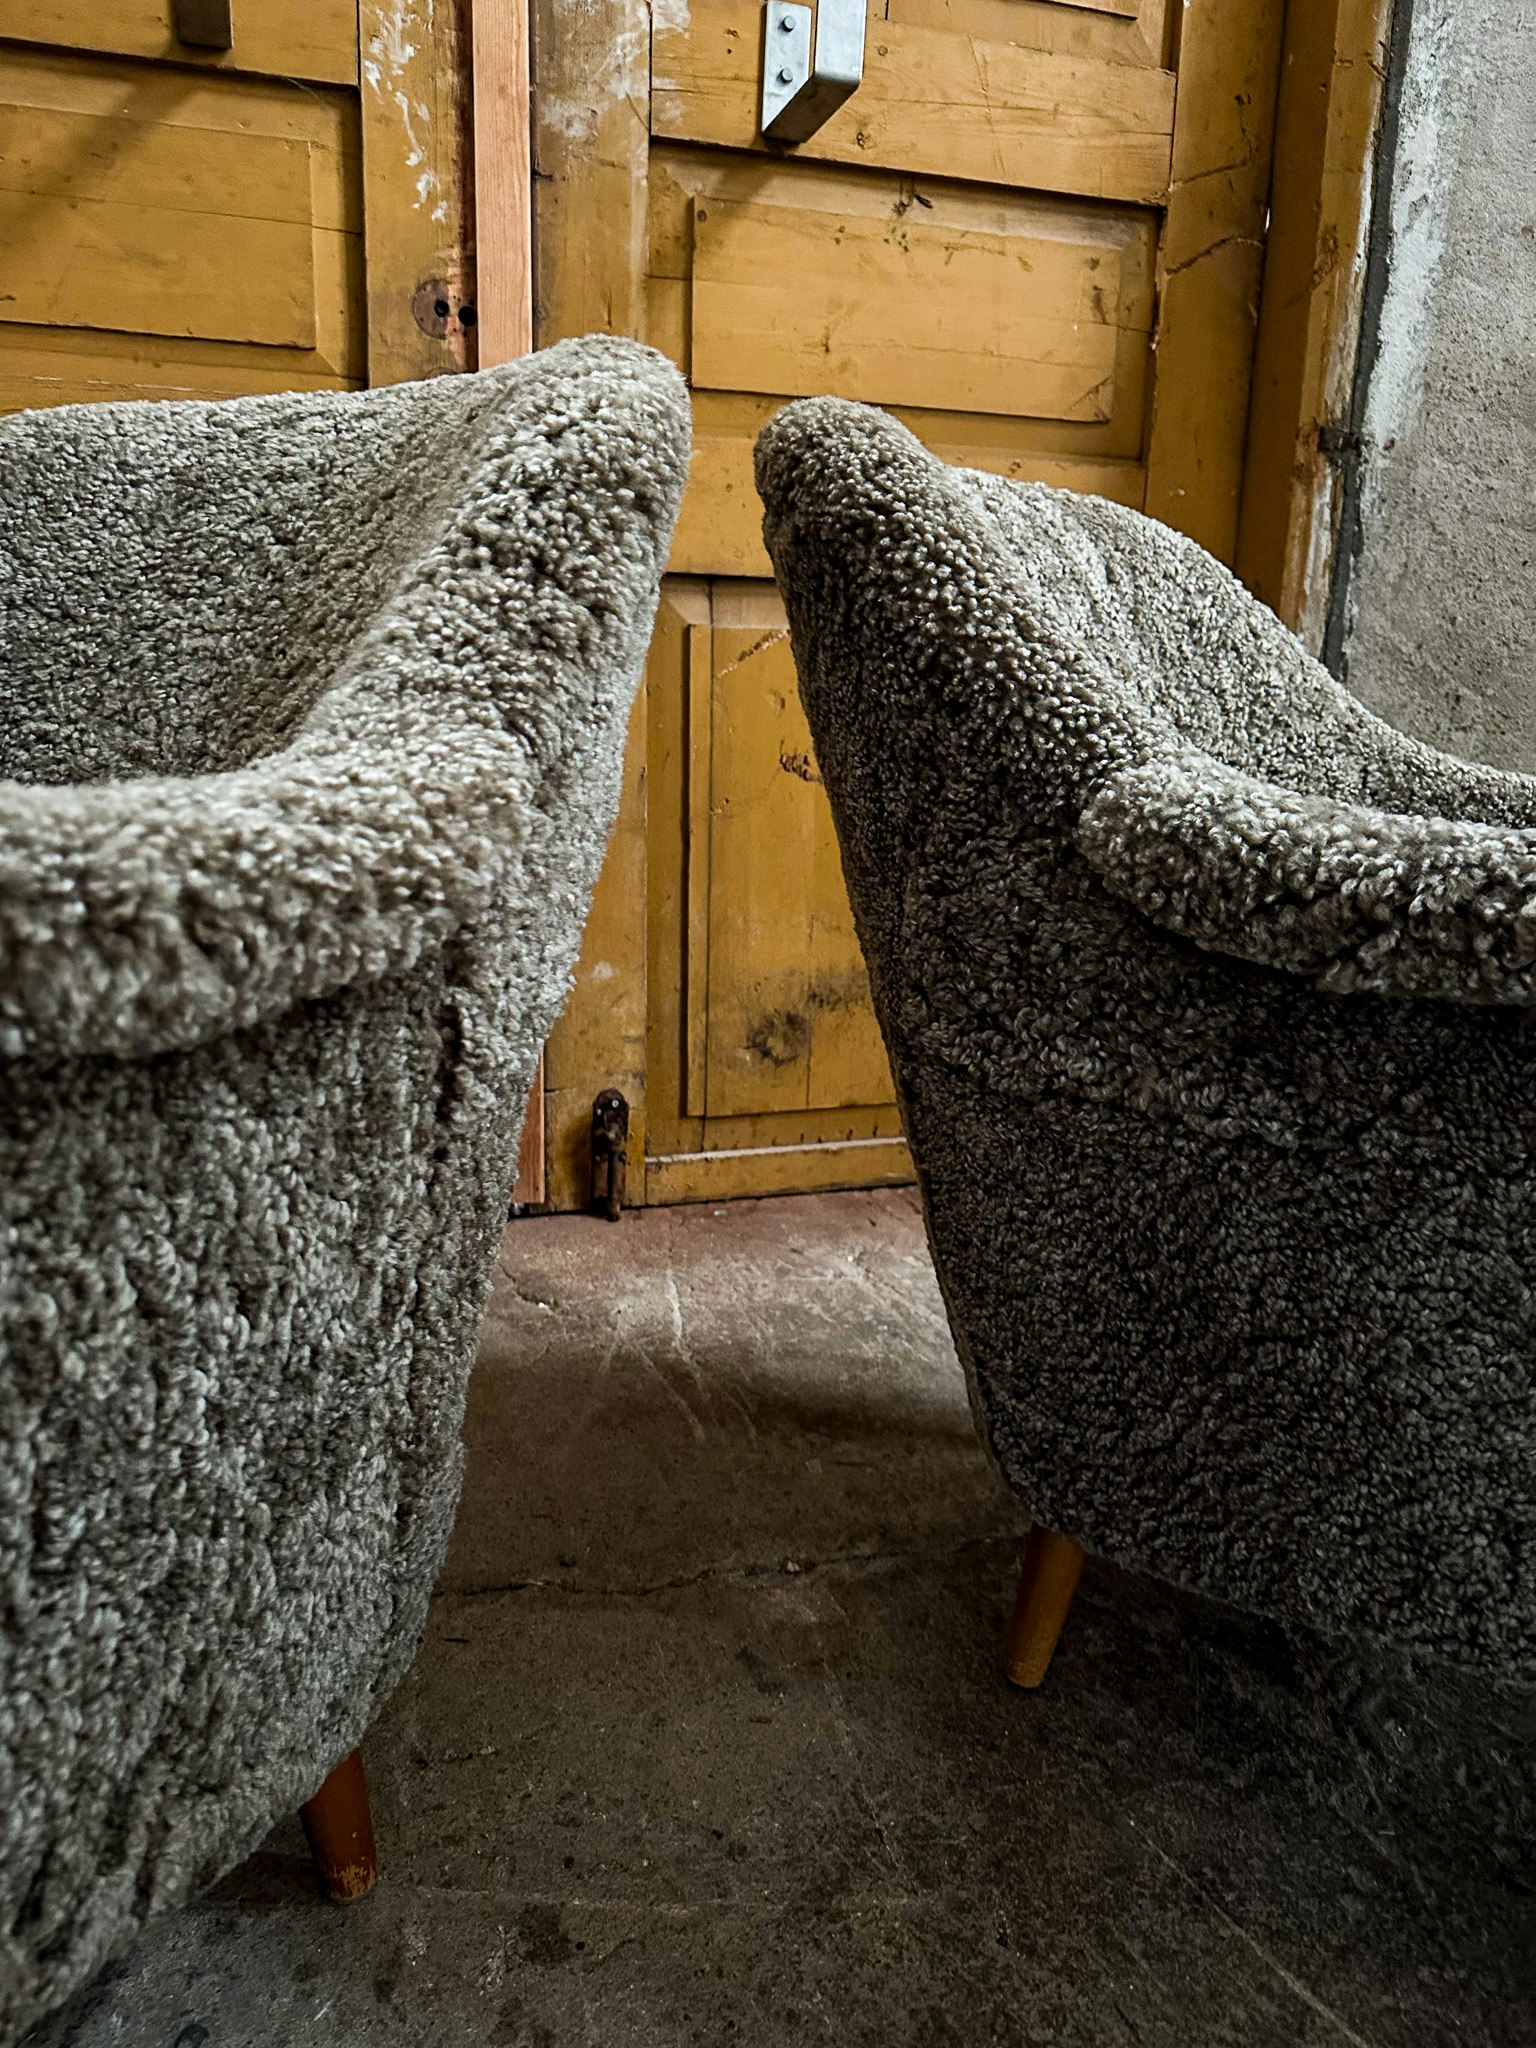 Midcentury Modern Sheepskin/Shearling Carl Malmsten Model Samspel Lounge Chairs